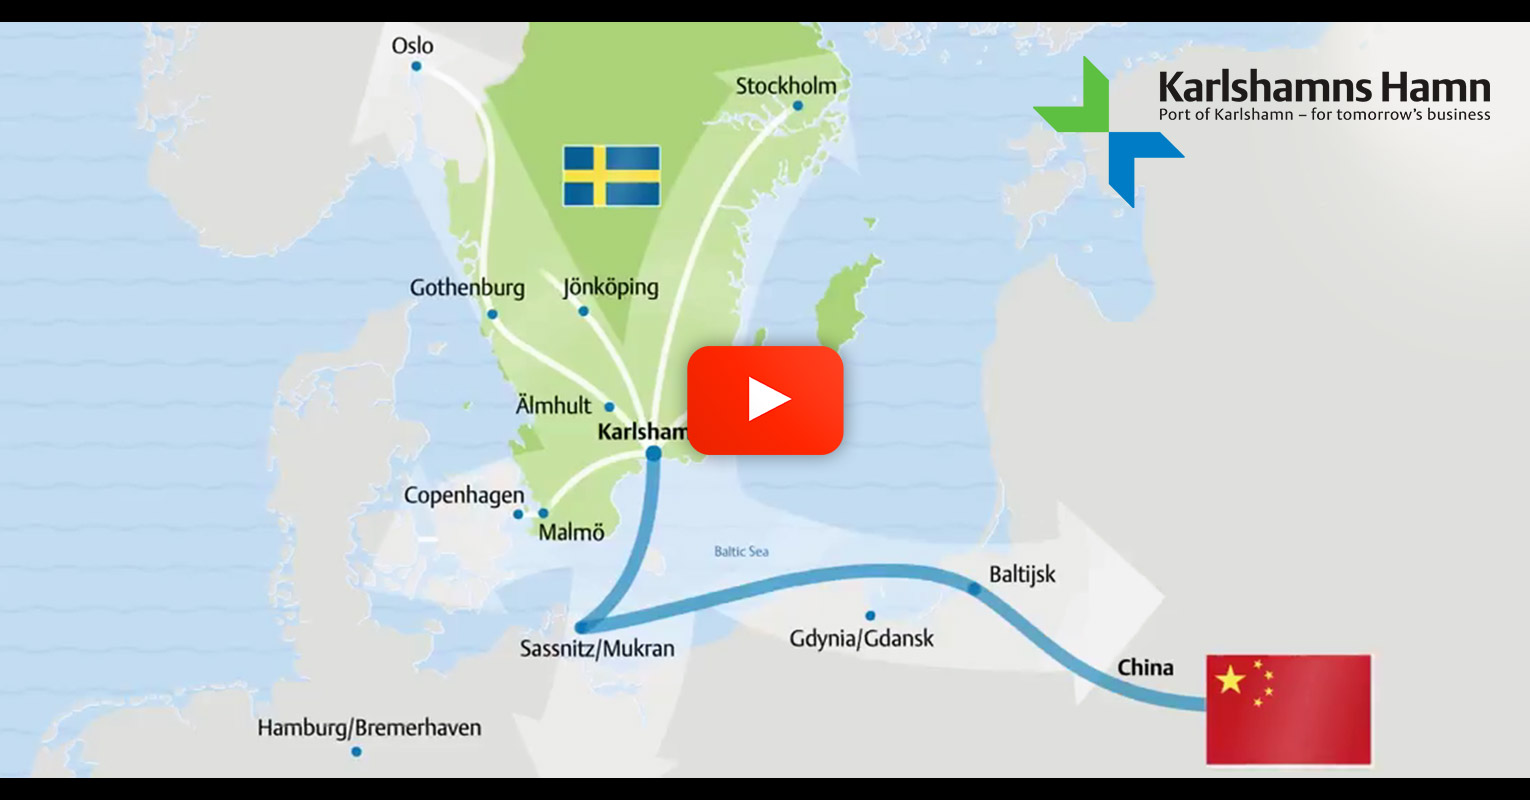 Port of Karlshamn Service Between China and Sweden